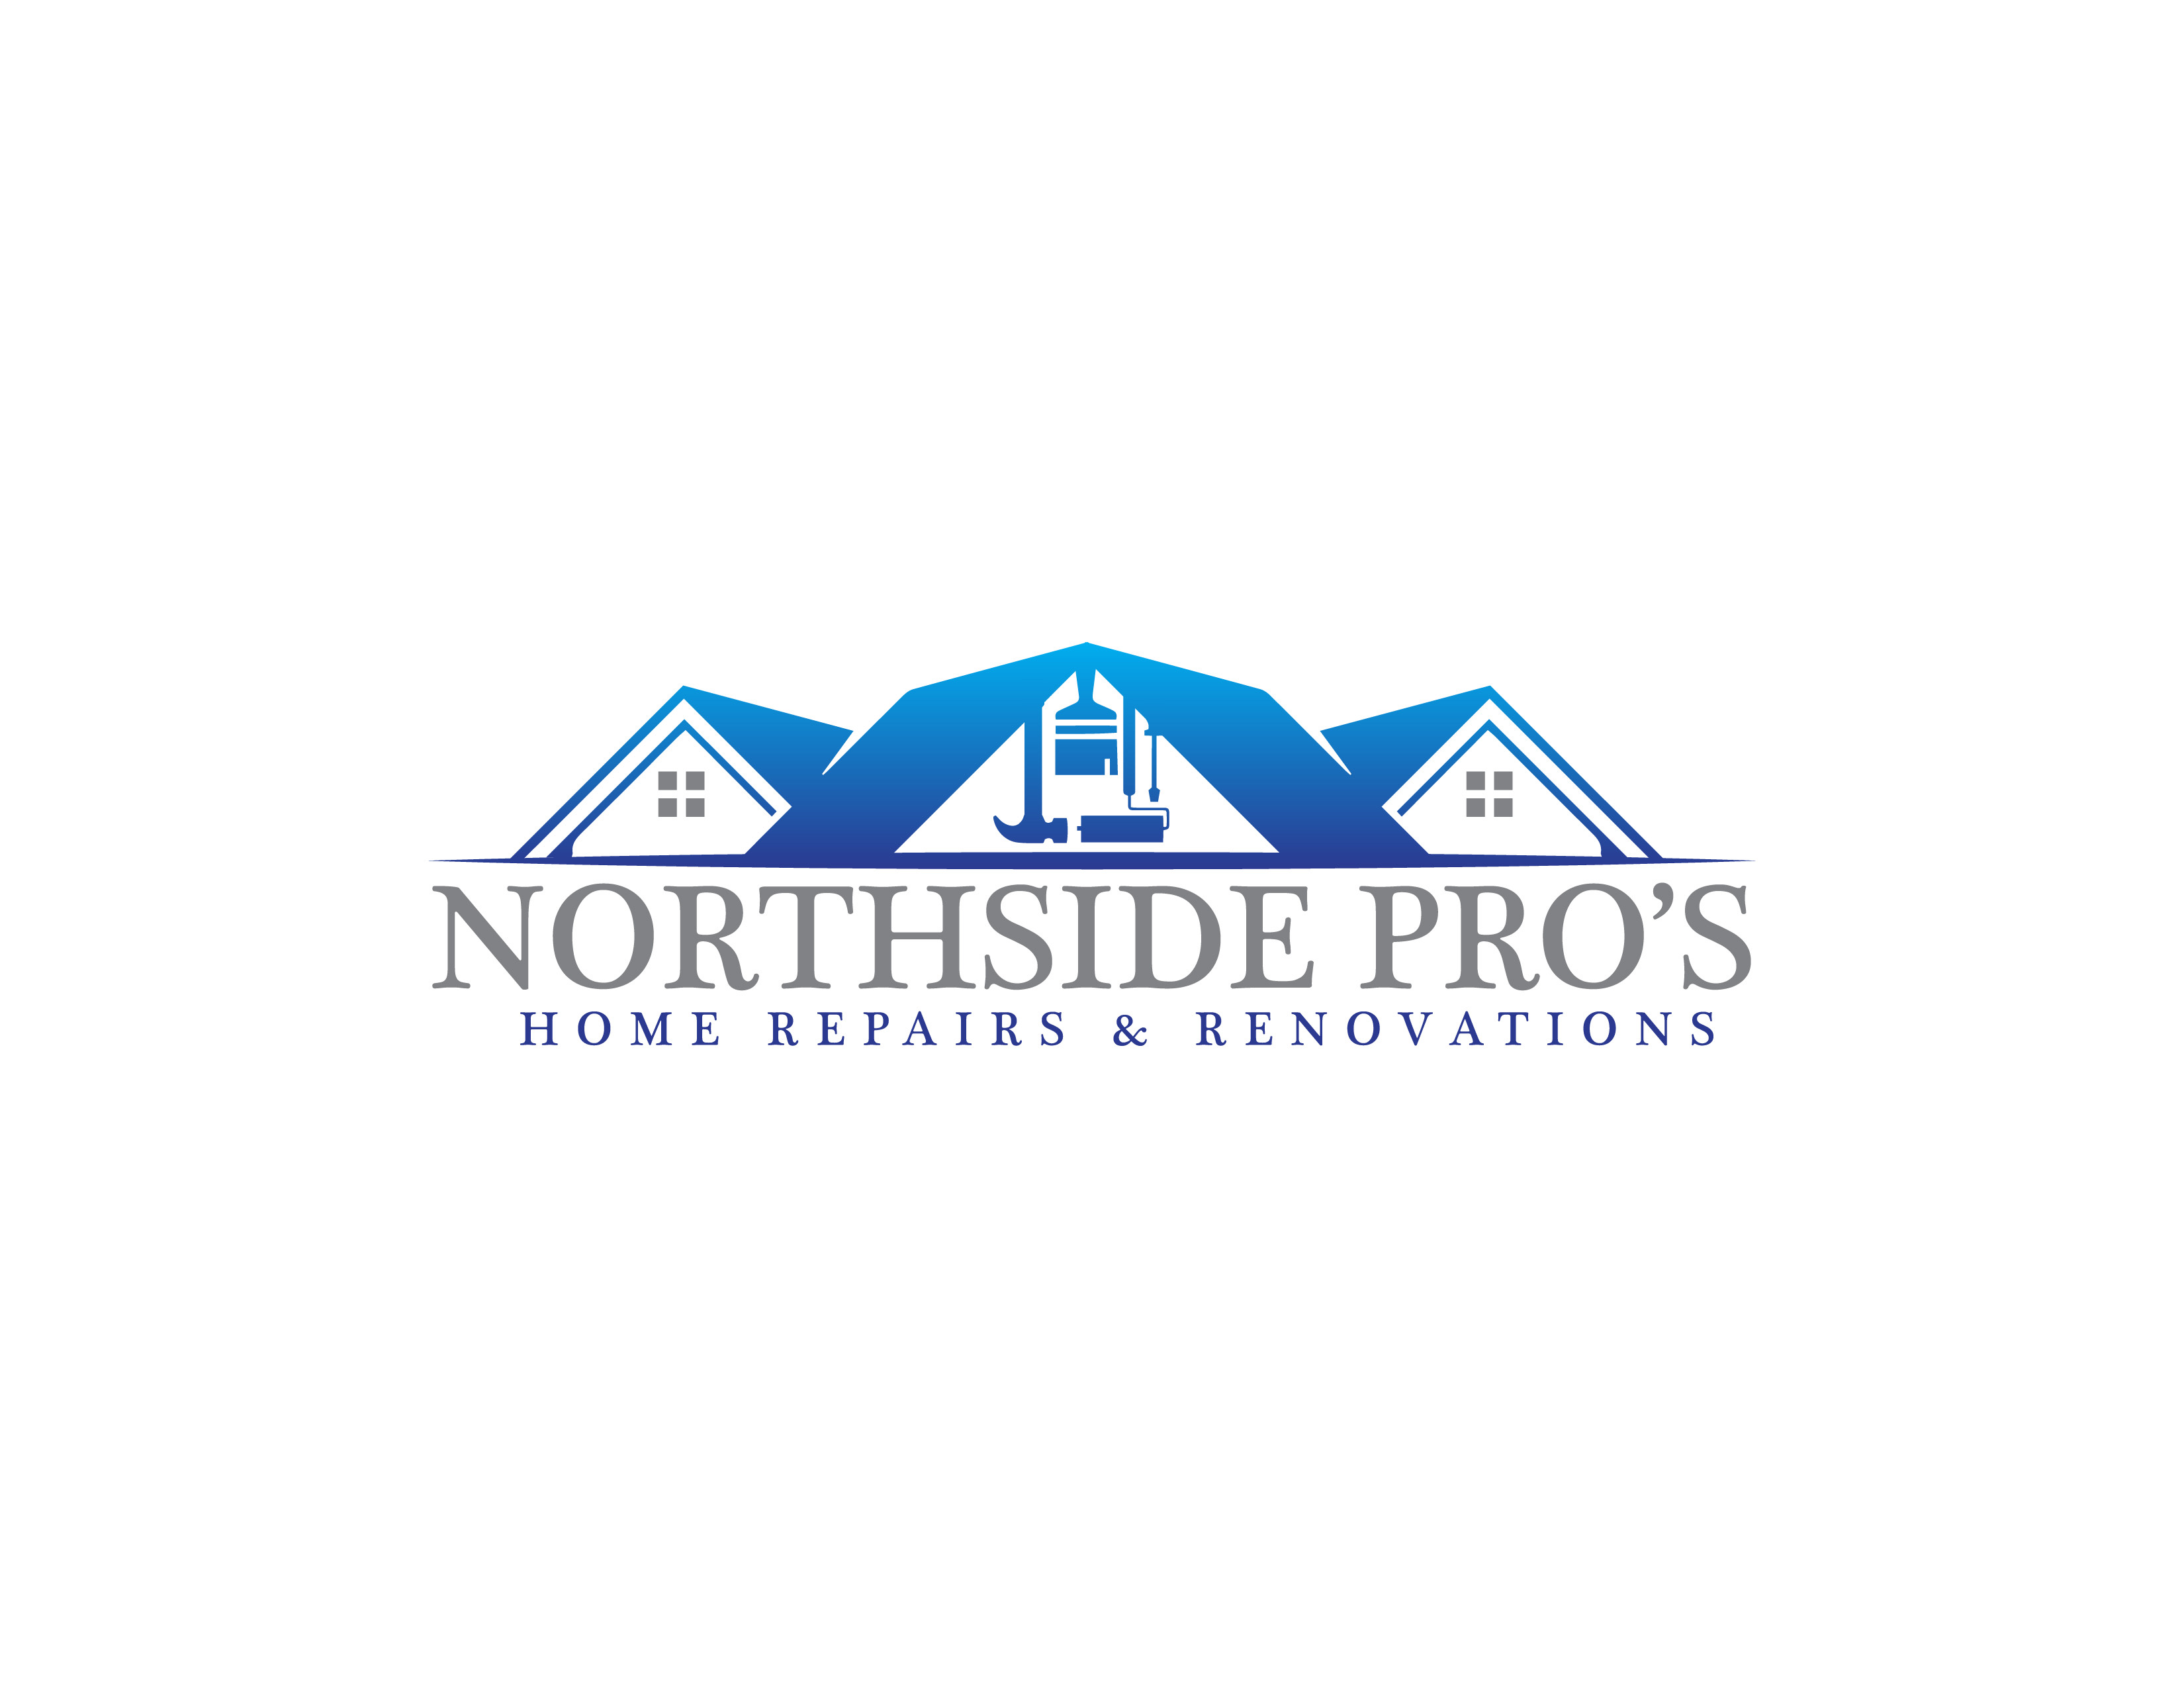 Northside Pro's Home Repairs & Renovations Logo